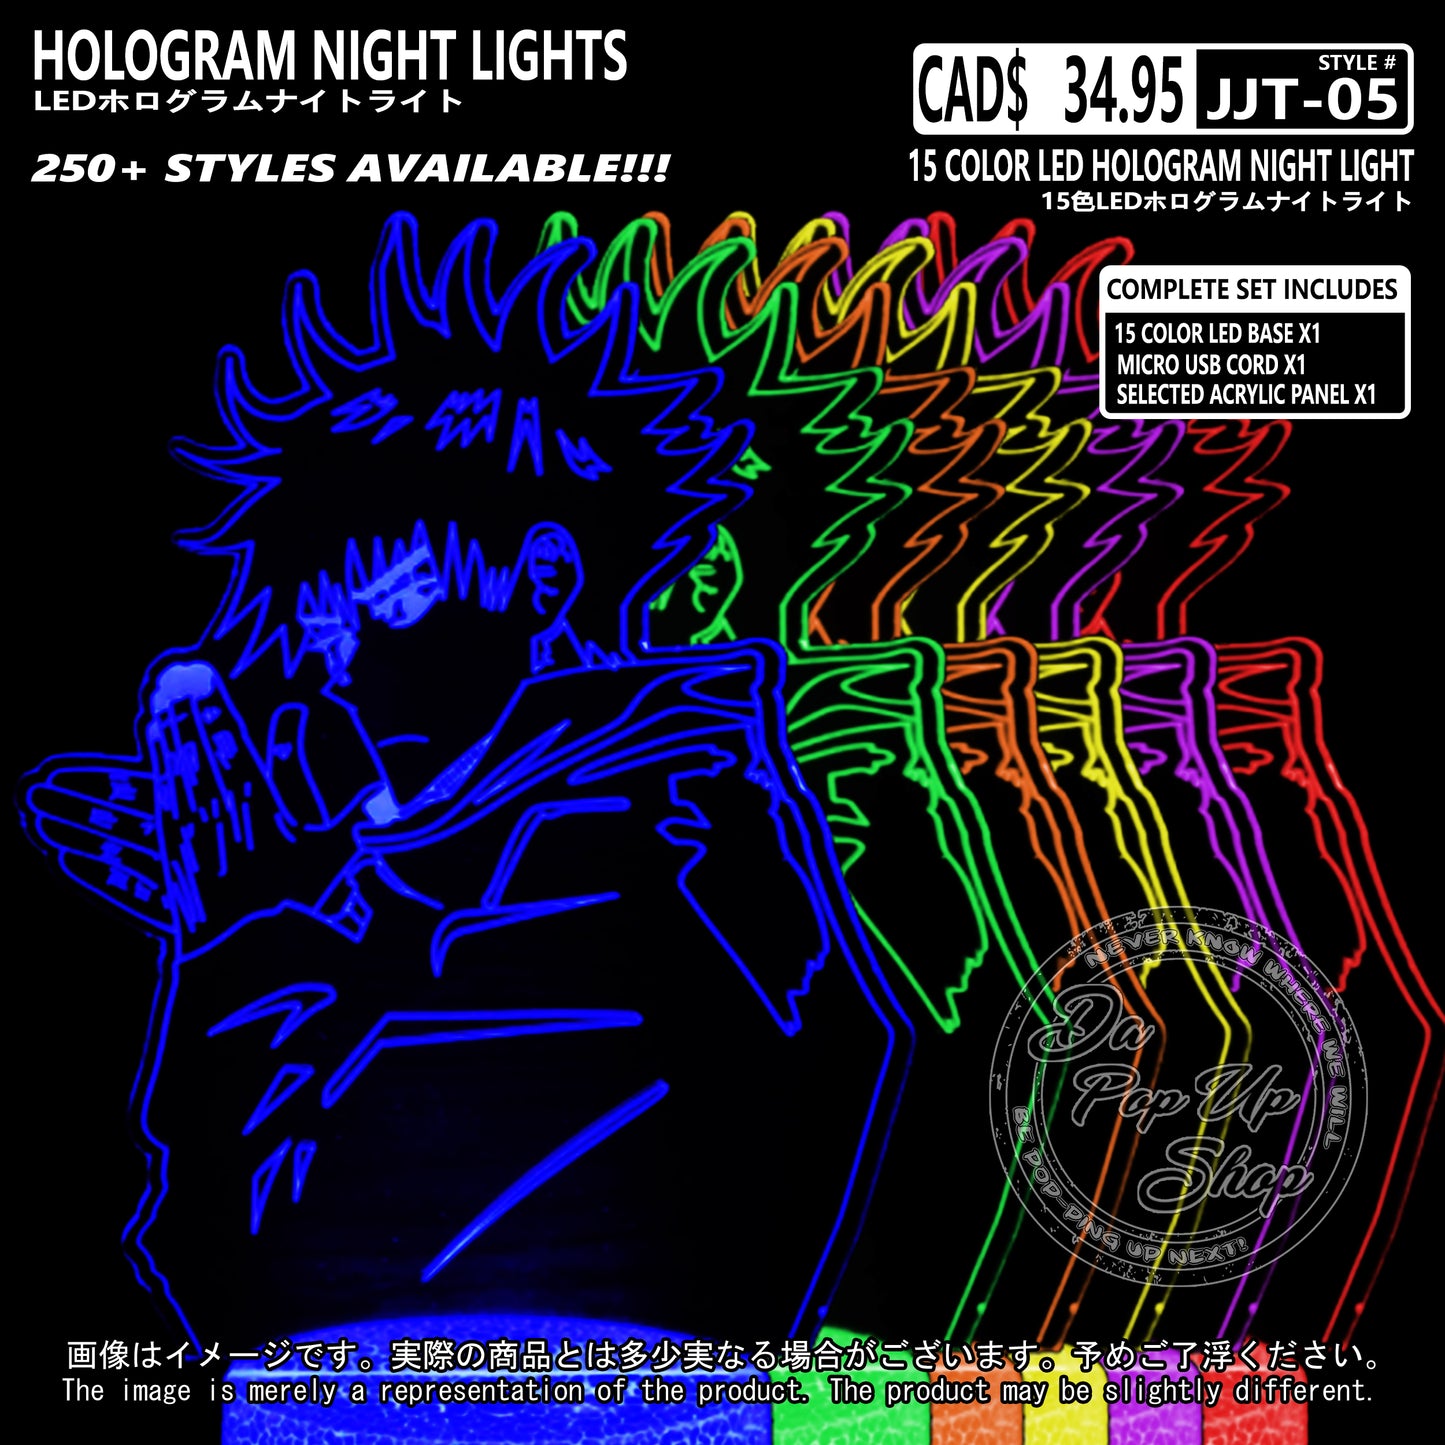 (JJT-05) Jujutsu Kaisen Hologram LED Night Light